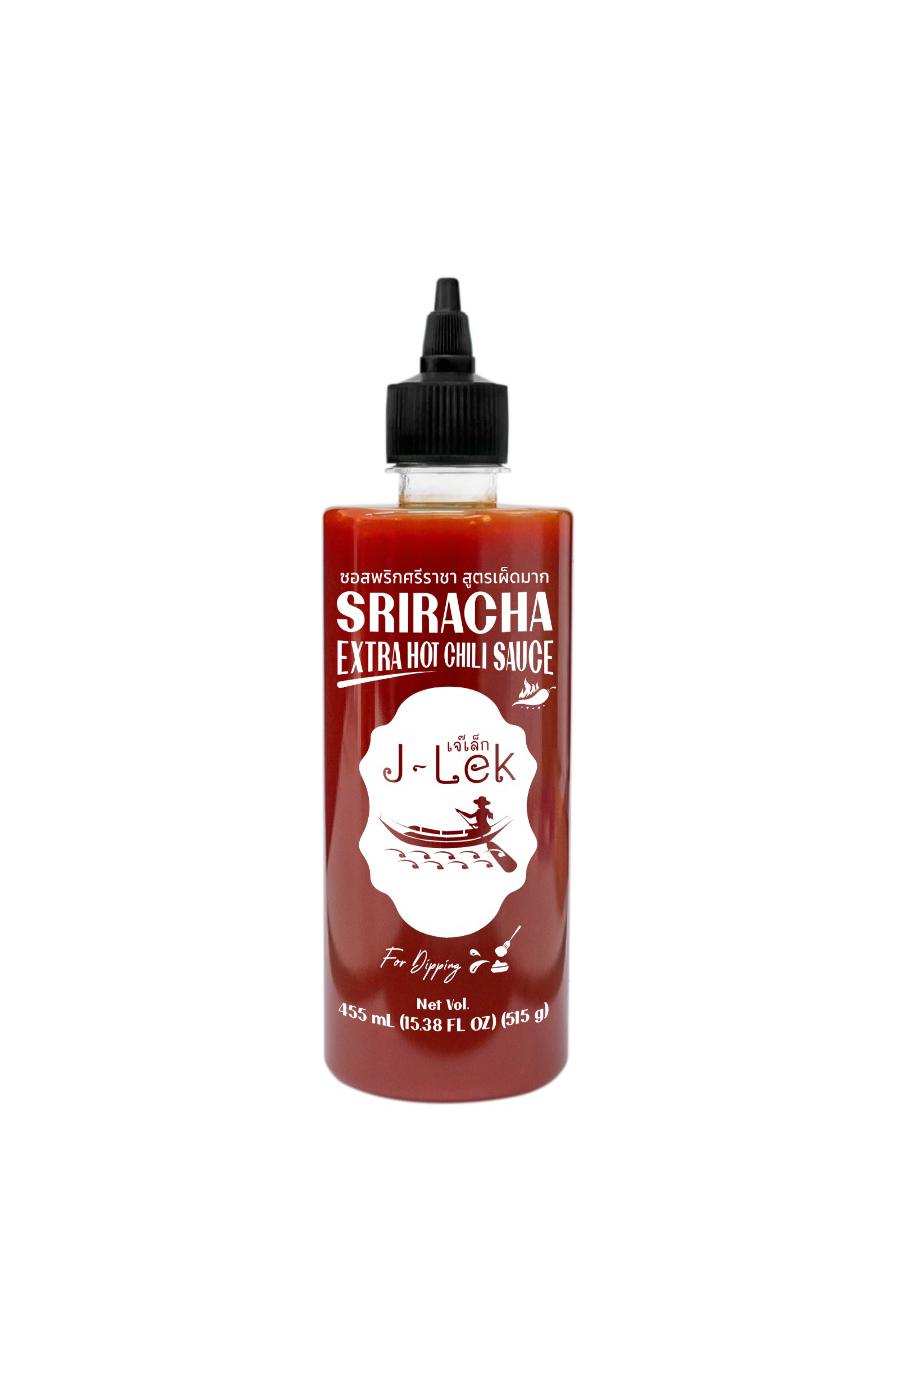 J Lek Sriracha Extra Hot Chili Sauce; image 1 of 3